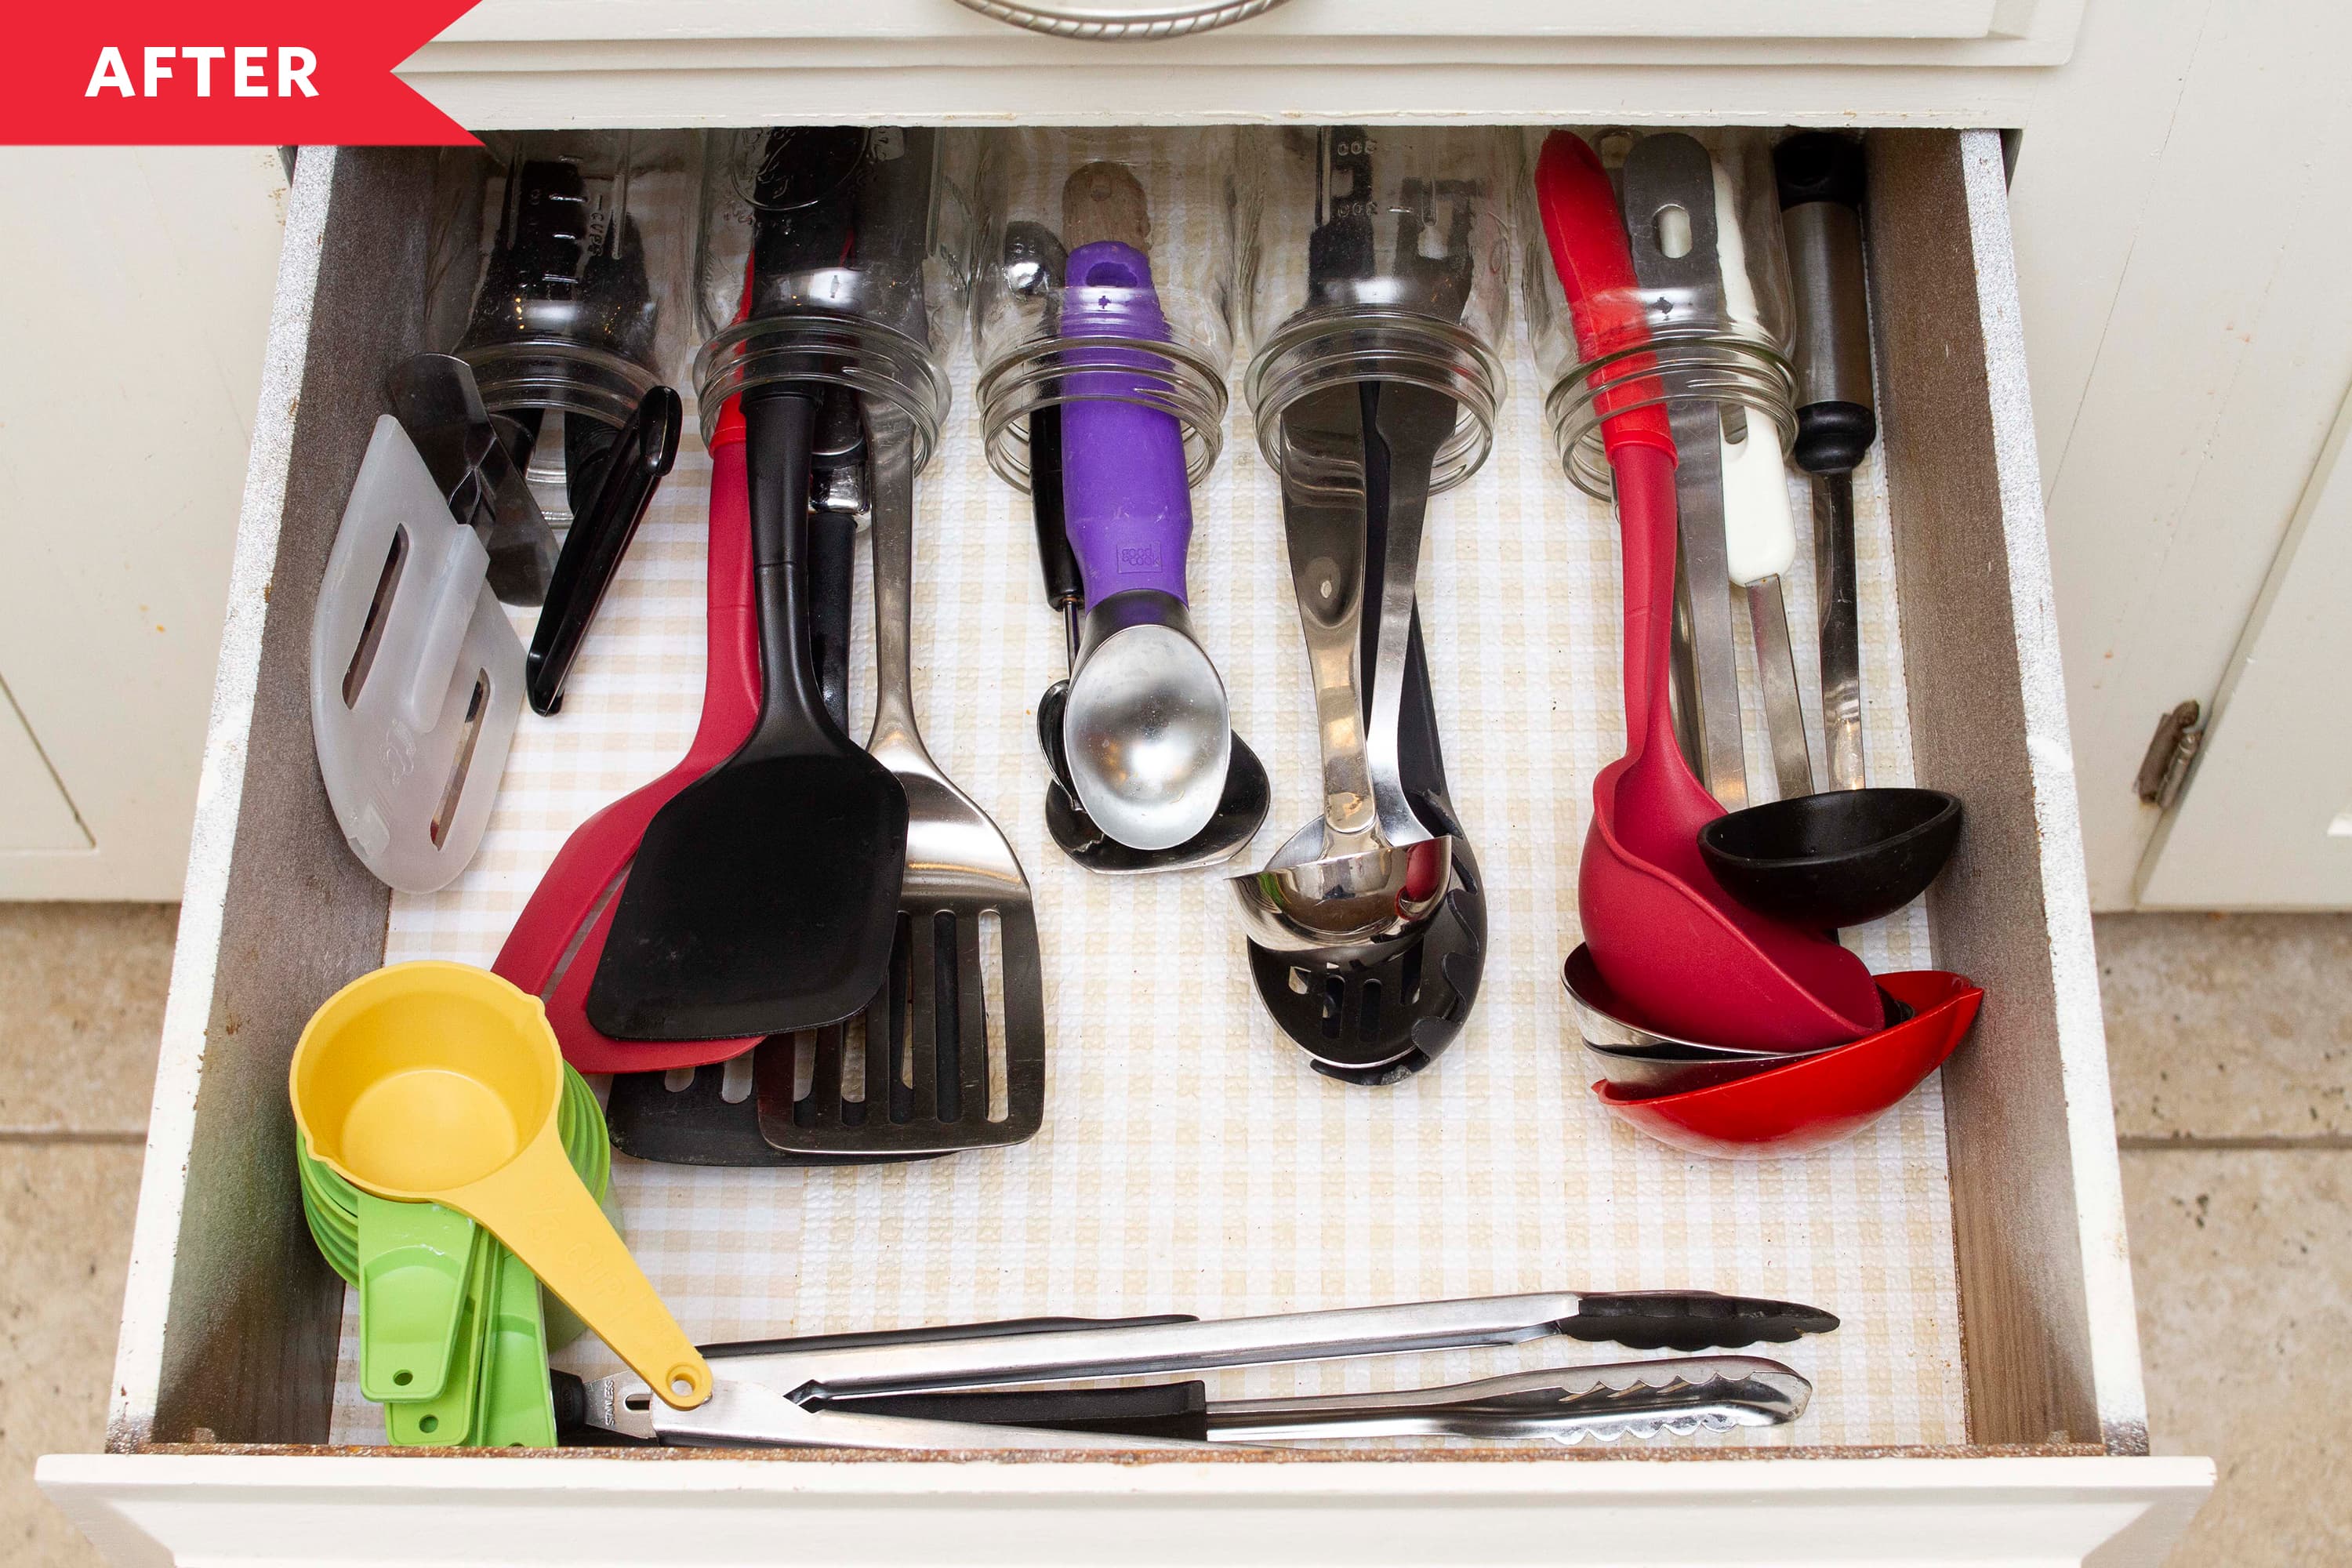 https://cdn.apartmenttherapy.info/image/upload/v1598466958/k/Edit/2020-08-Organizing-Parents-Kitchen/drawer-after-2.jpg